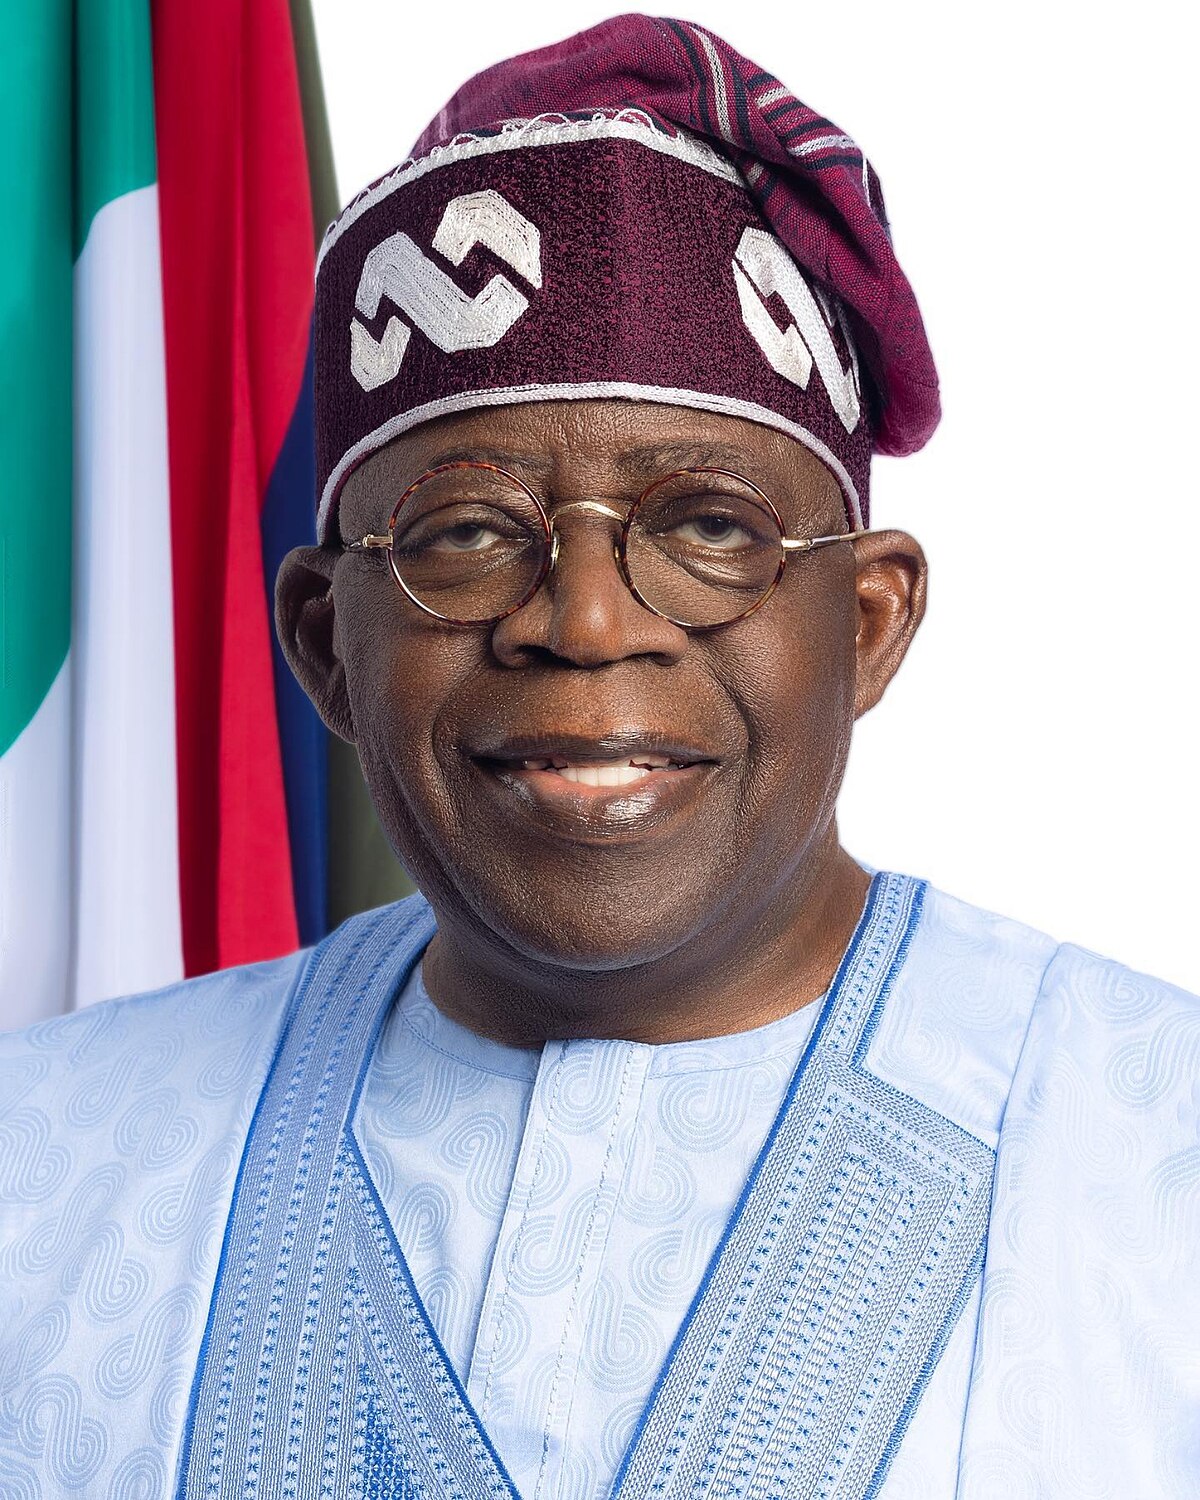 “The Mandate Nigerians Gave You Stands ” - Dare